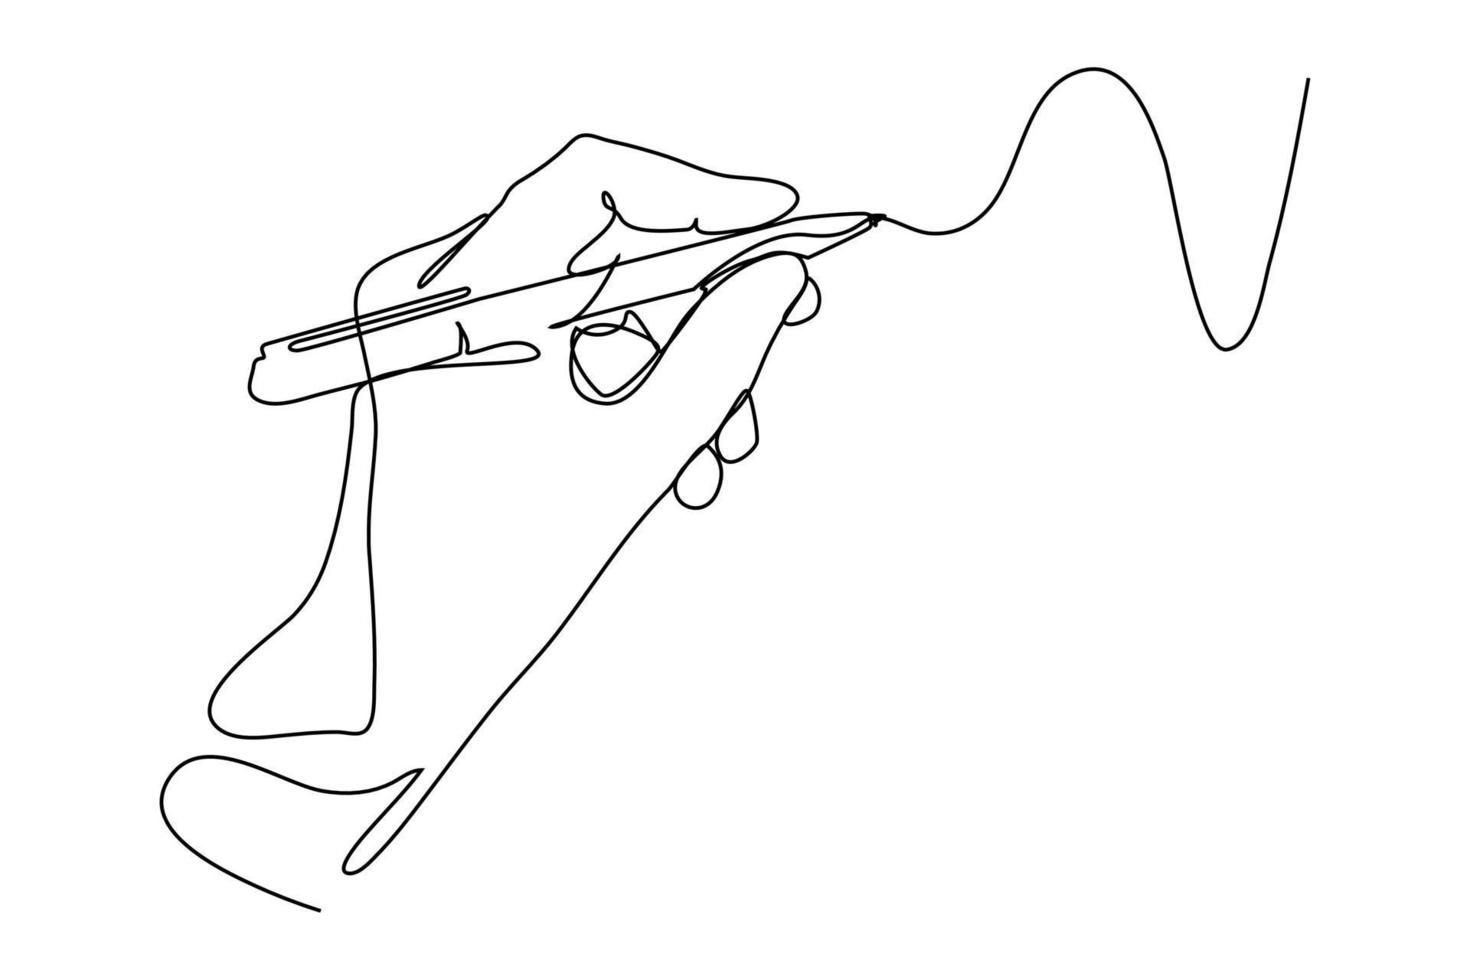 dibujo de línea continua de línea de dibujo a mano con lápiz vector